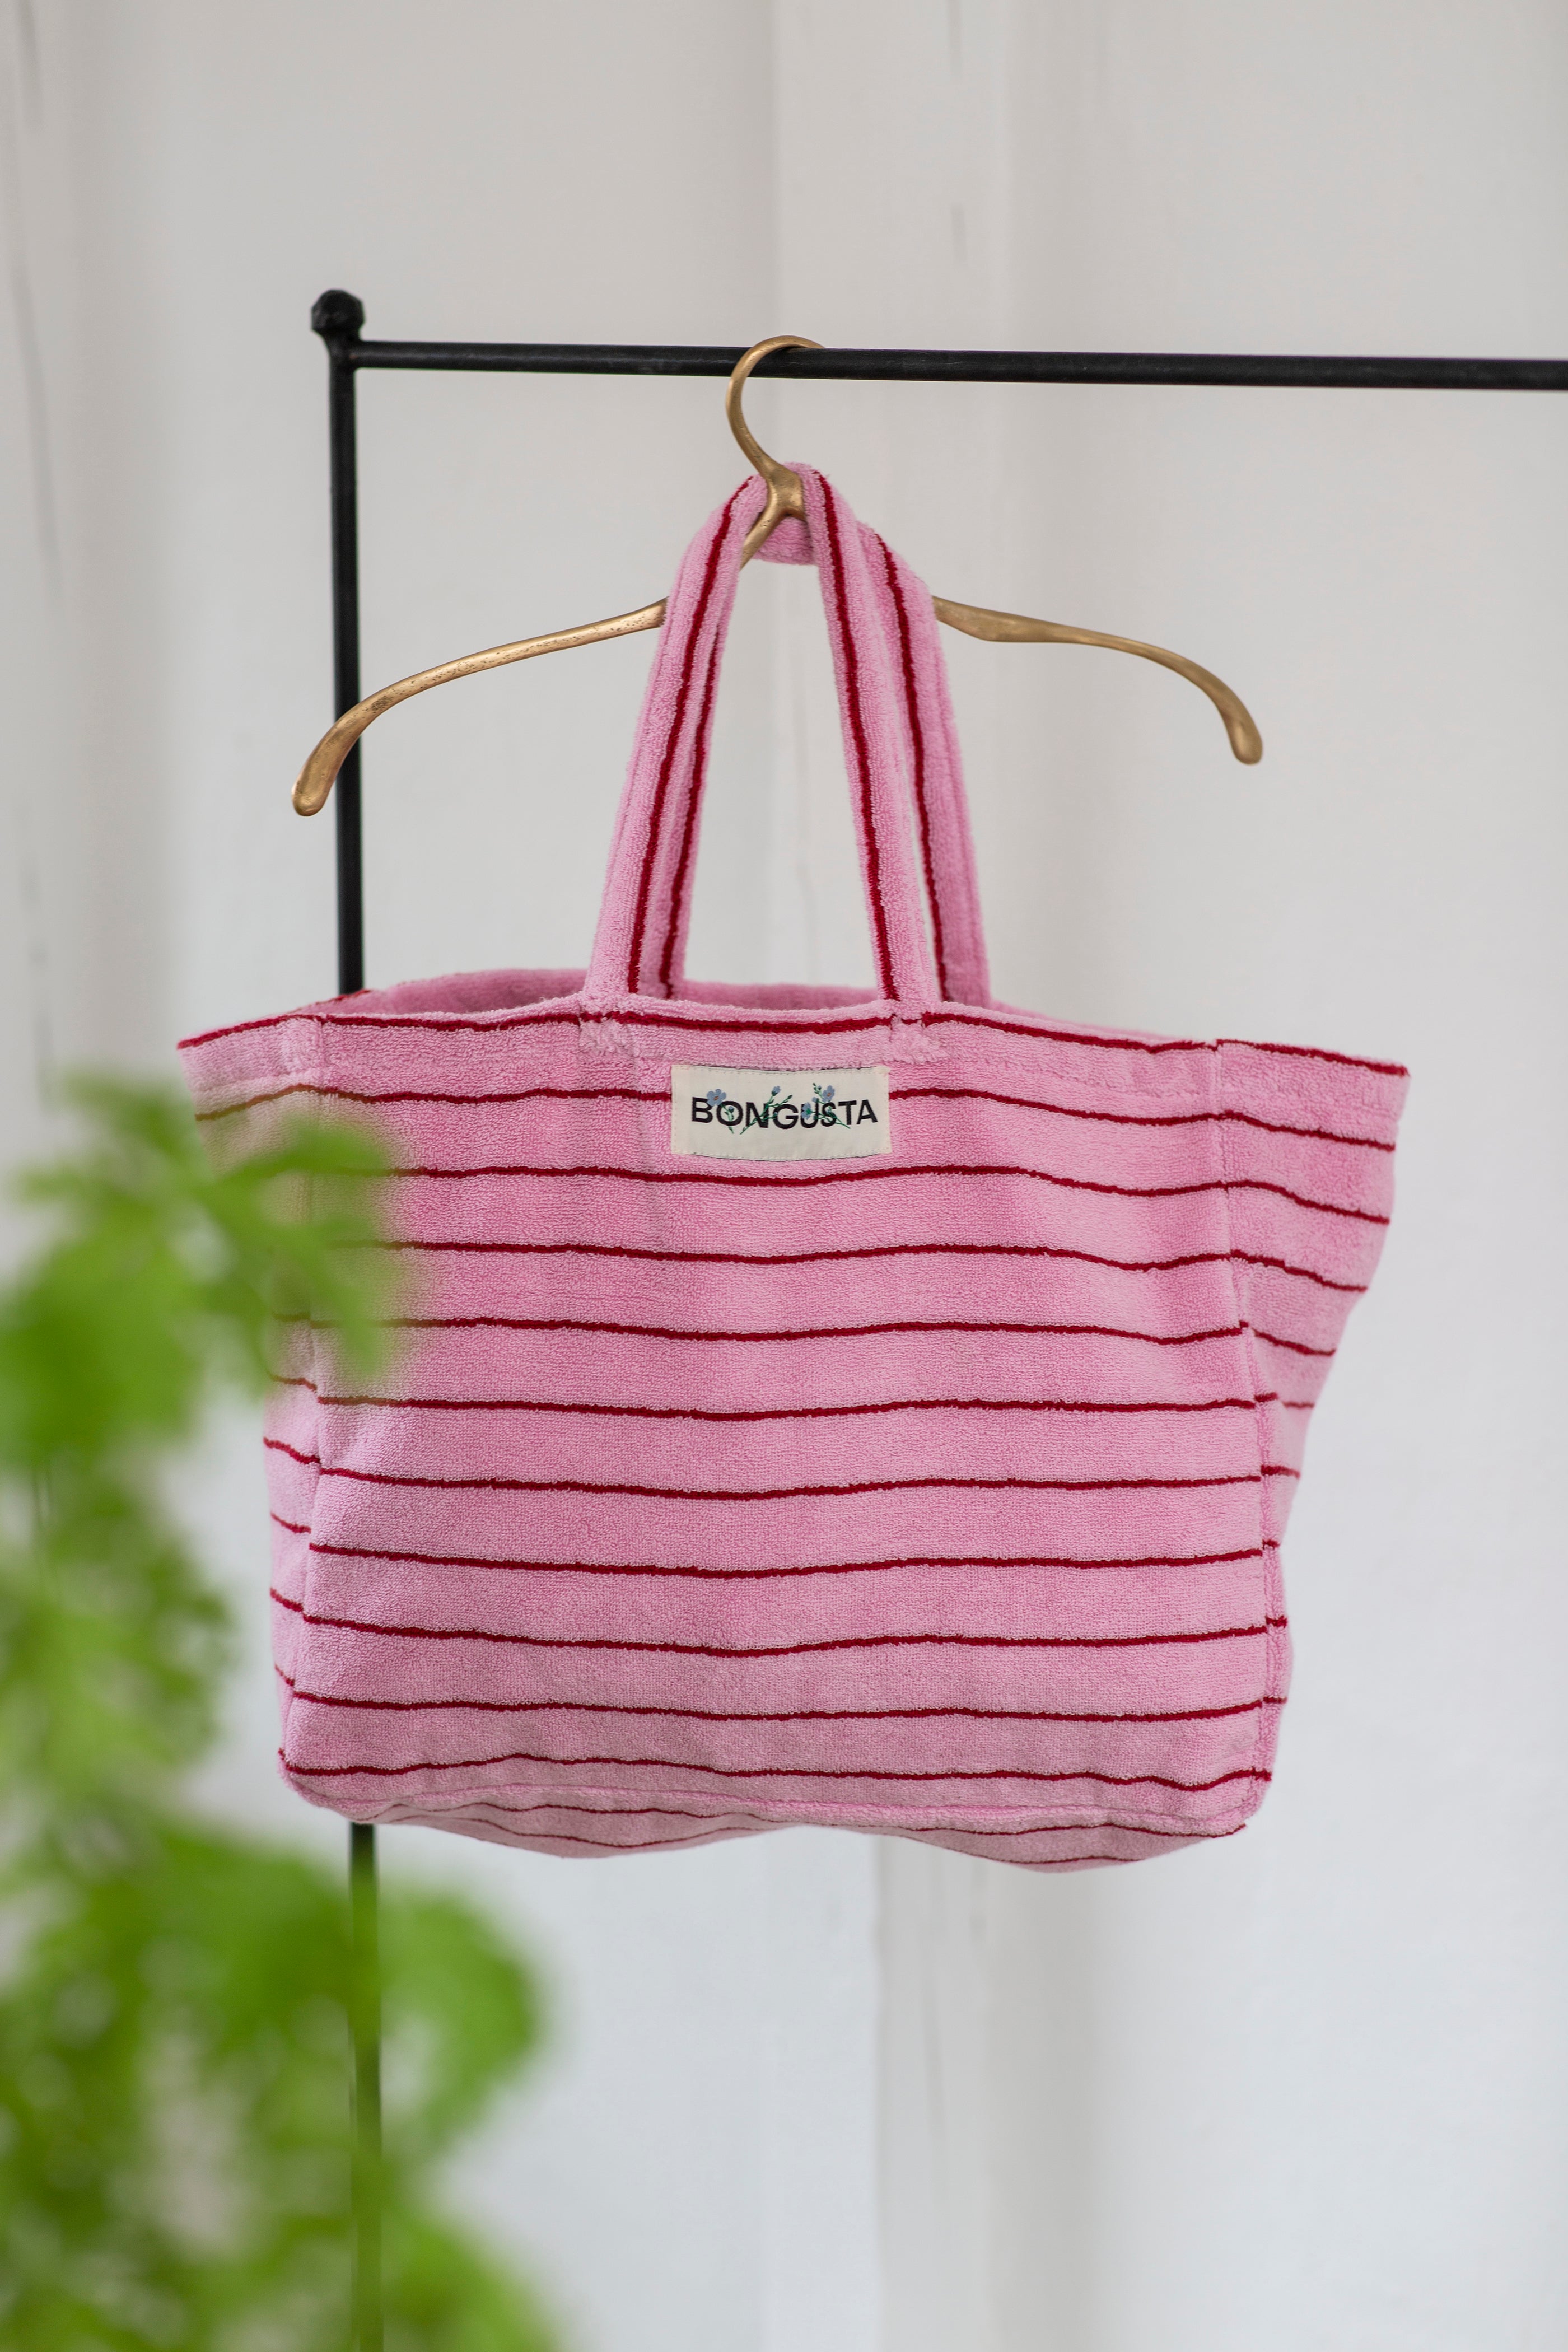 Bongusta | Bongusta | Discover premium Weekend Bags at Bongusta 